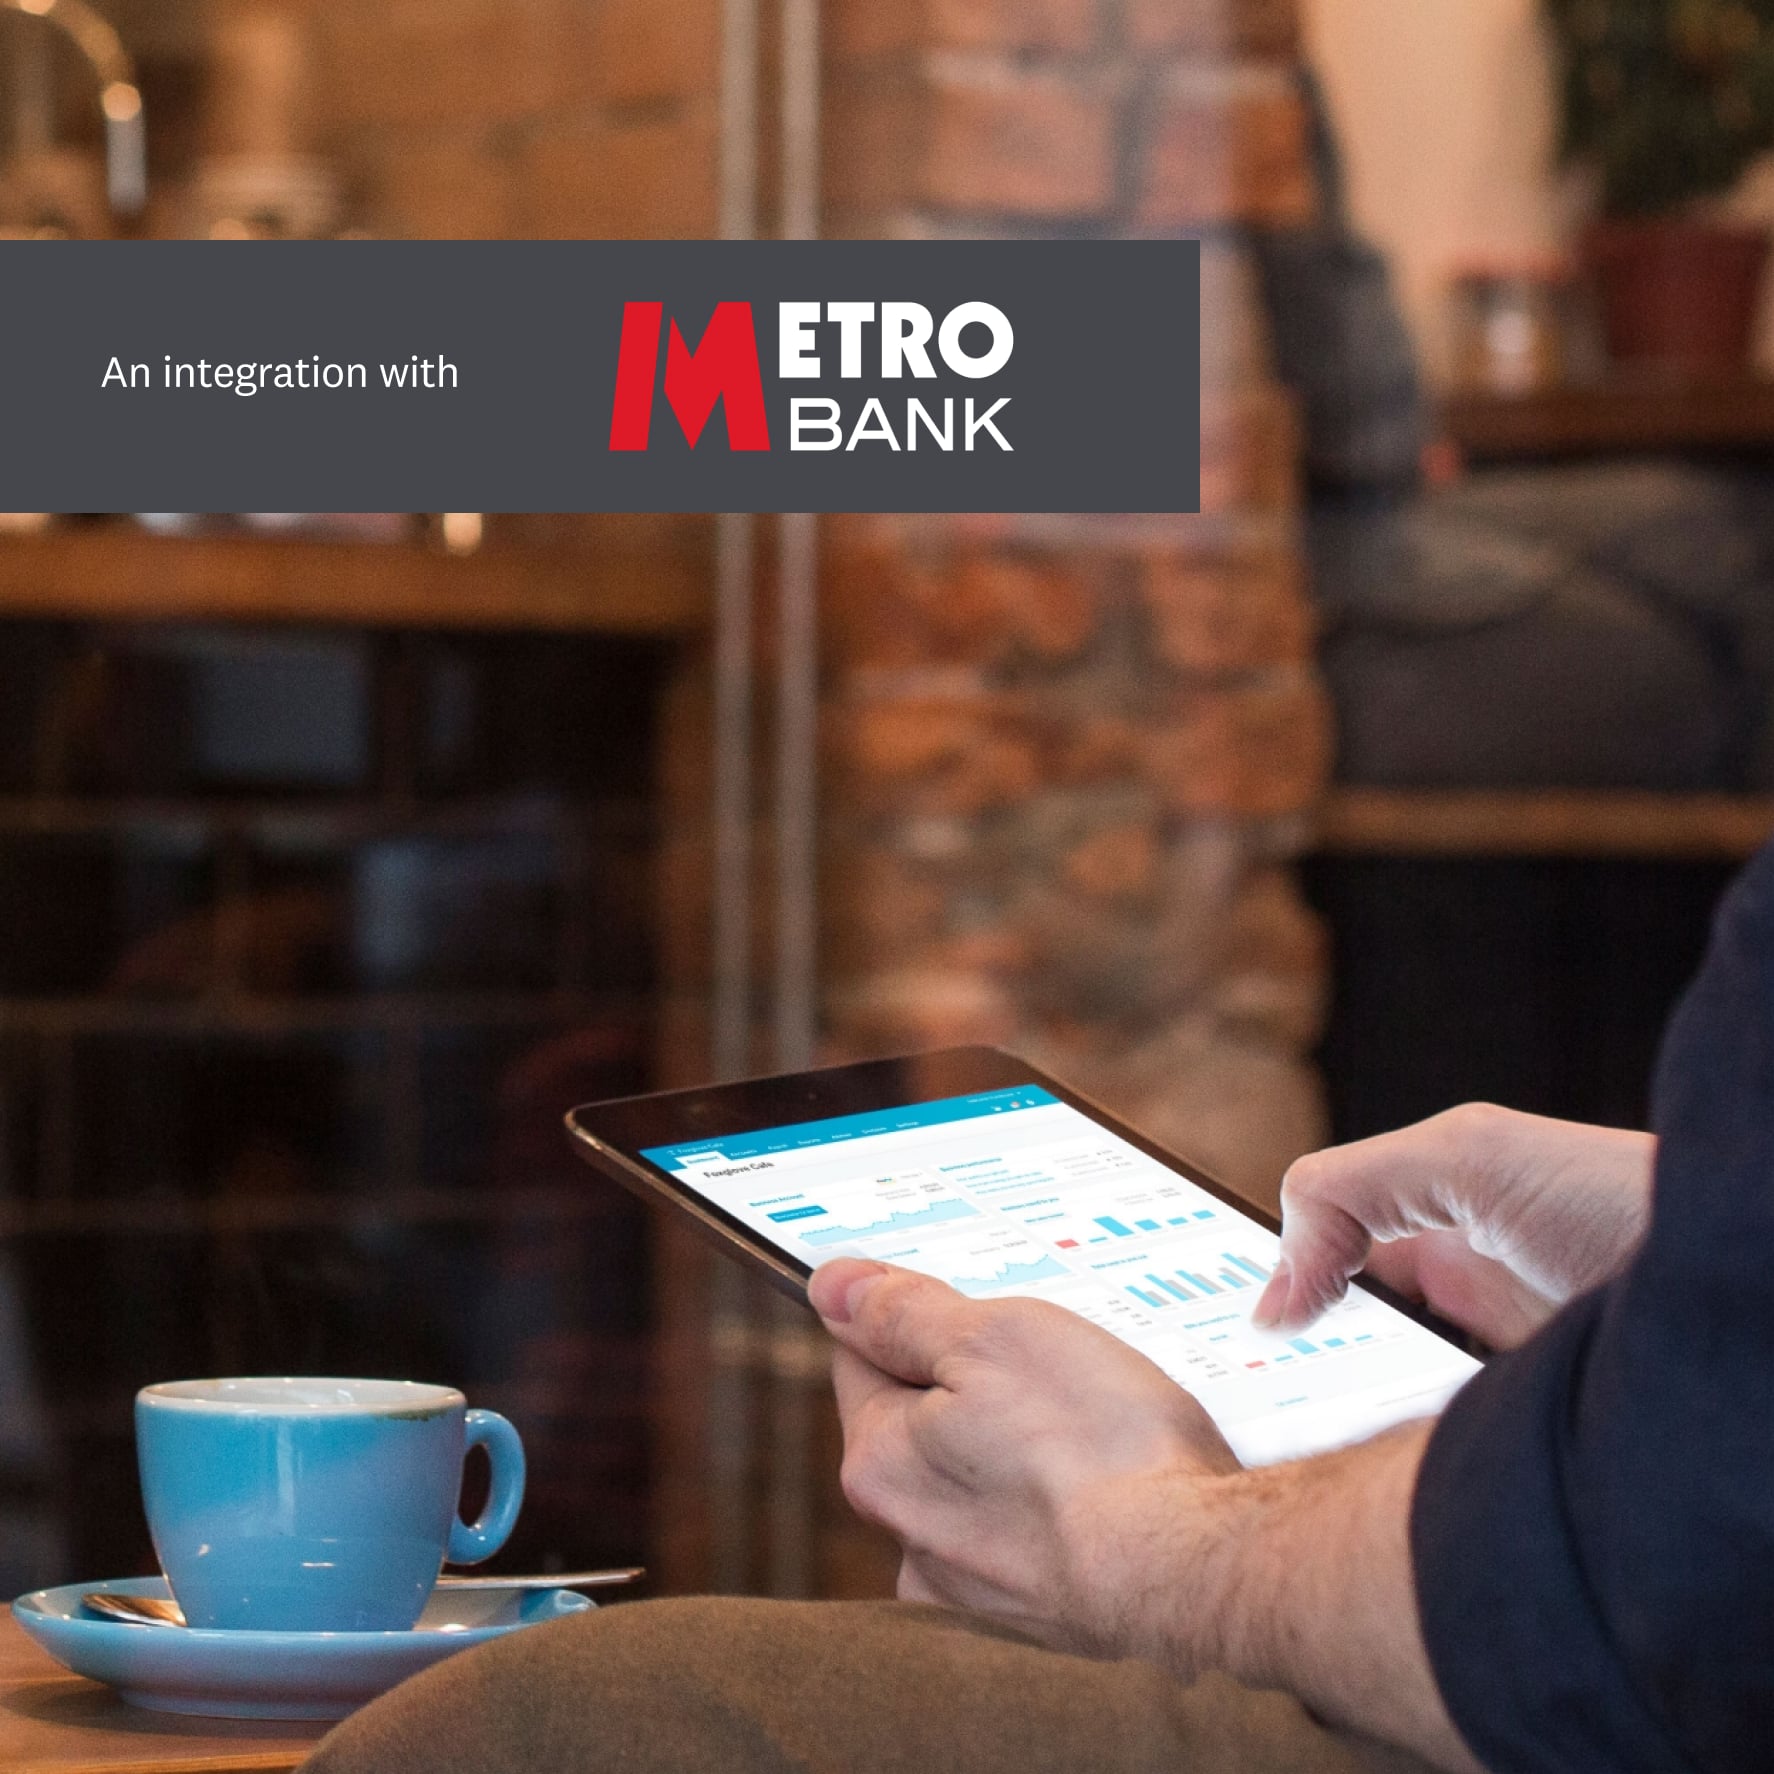 Xero in partnership with Metro Bank